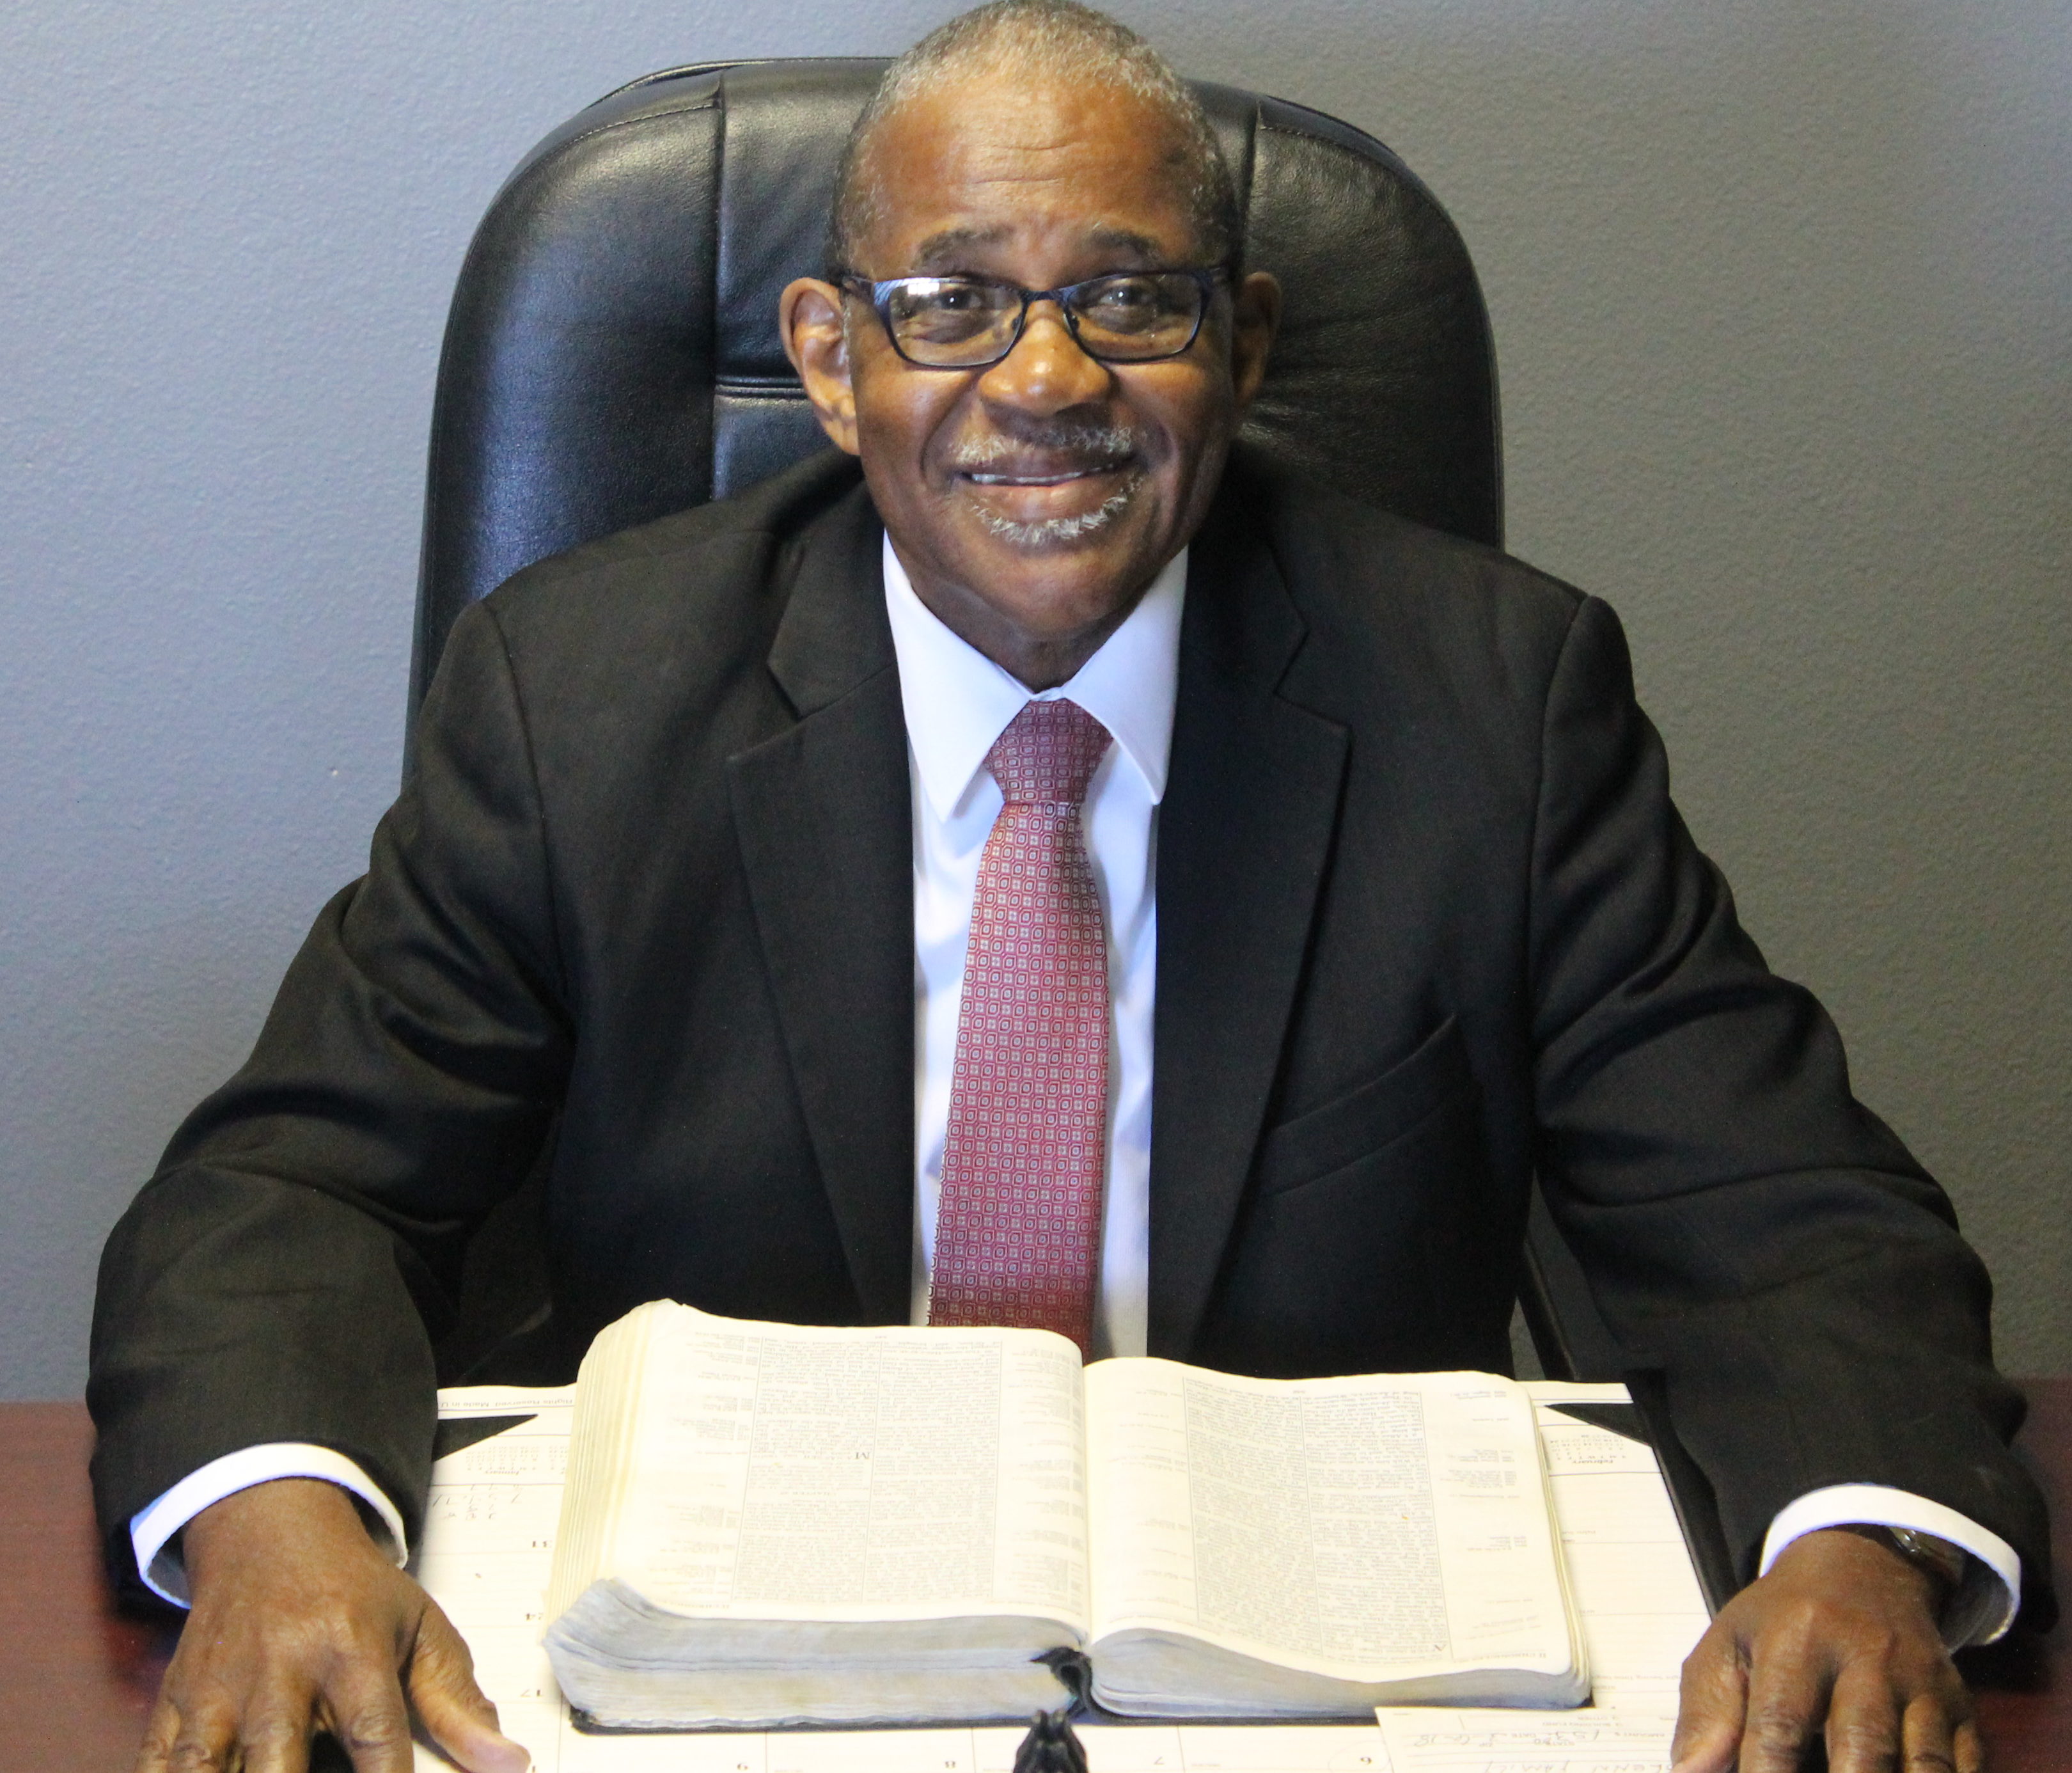 Isaiah Walker, Pastor